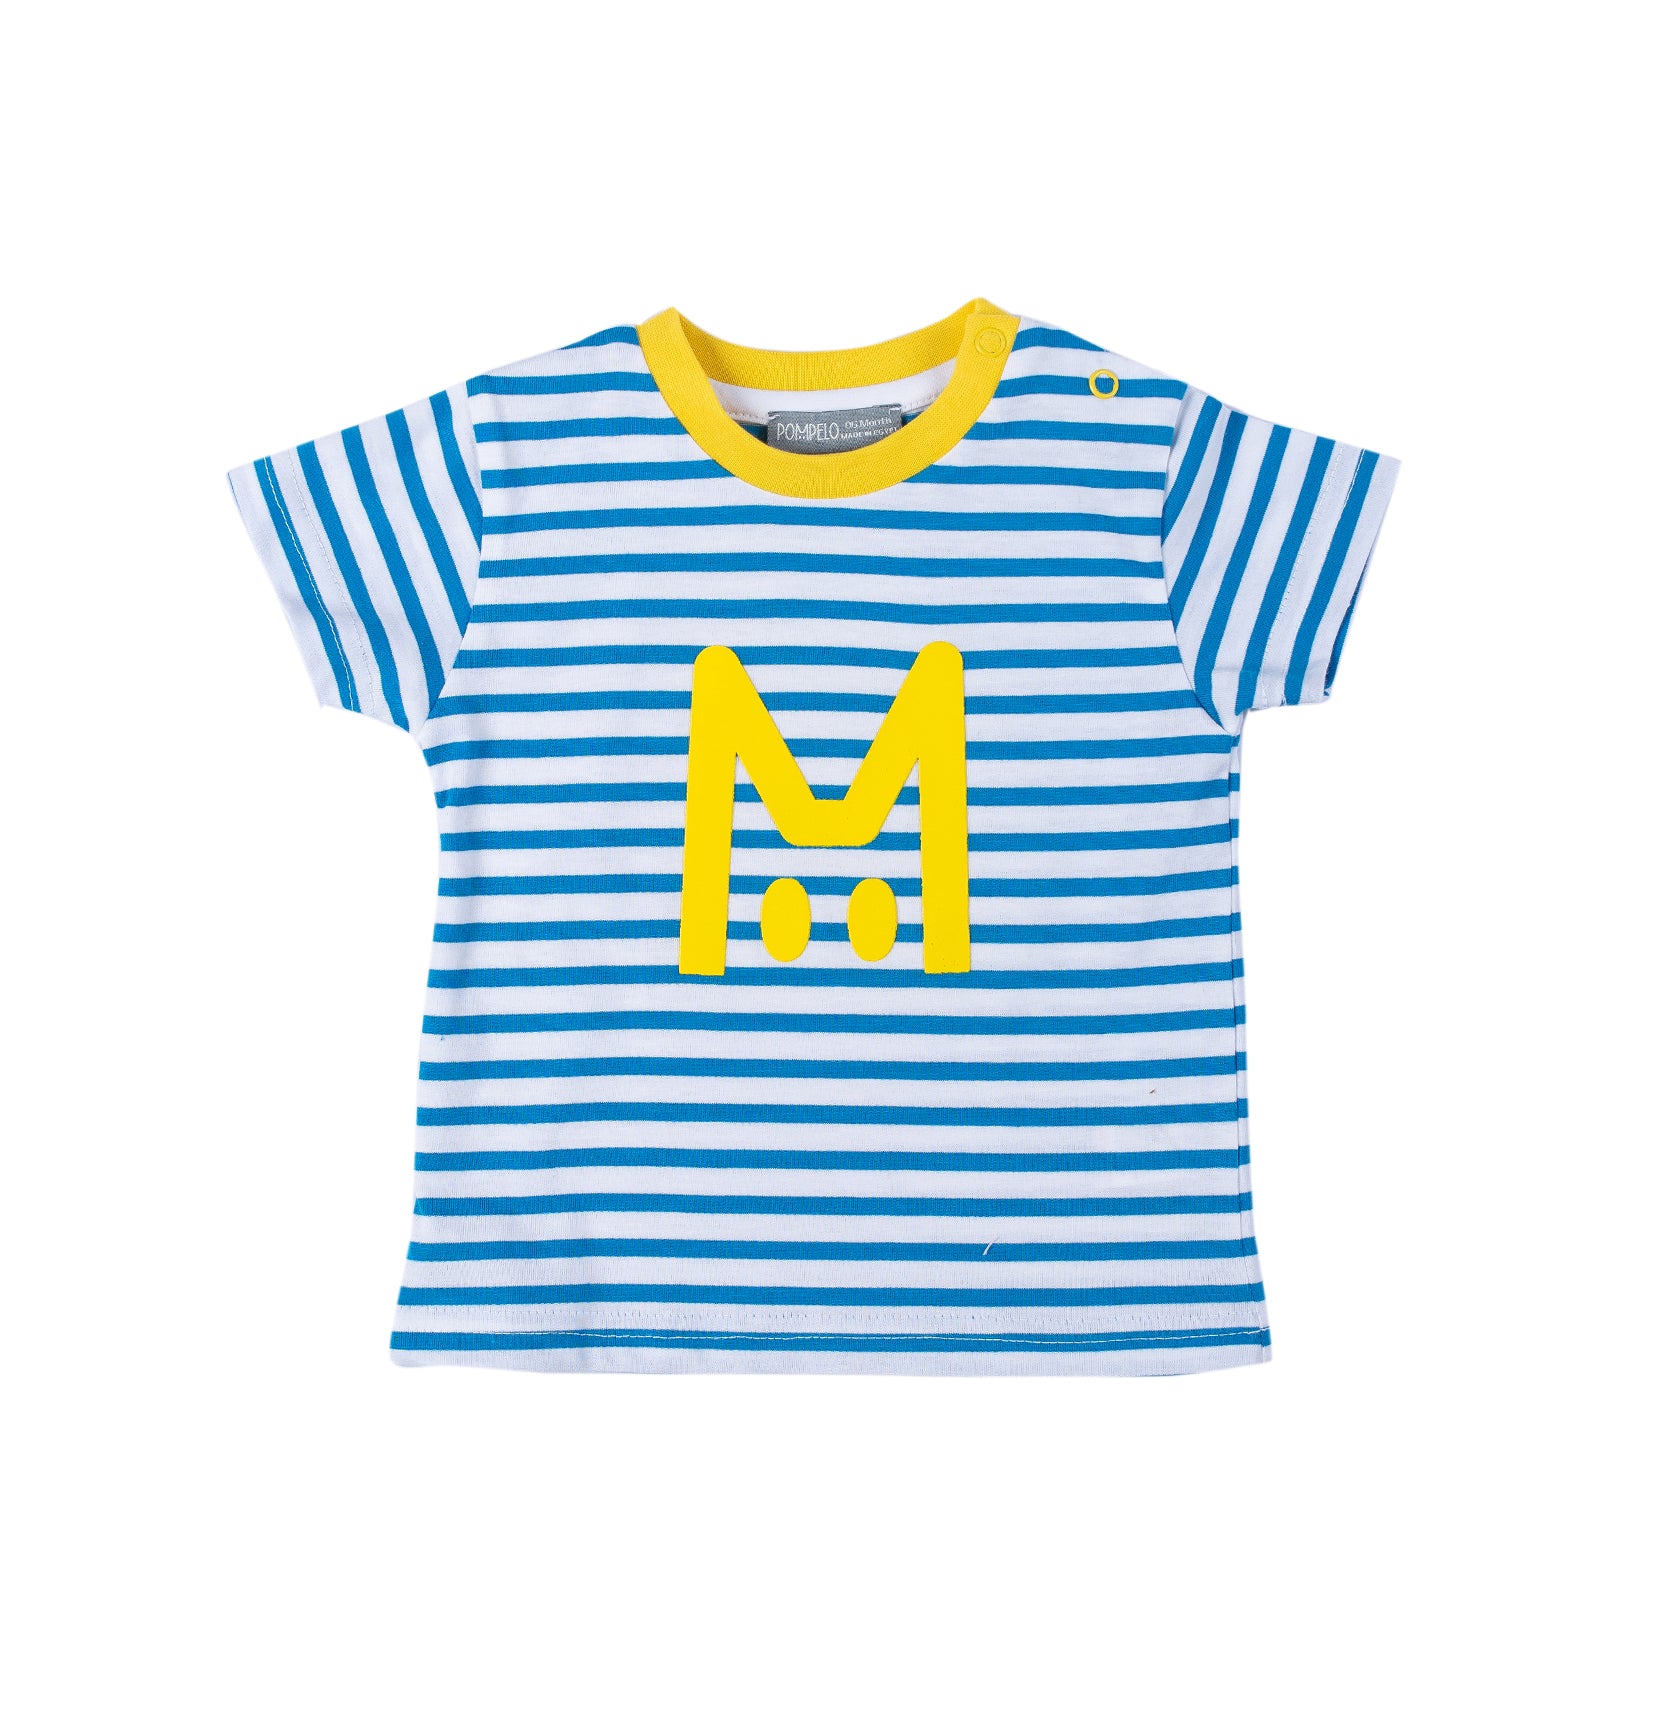 Boy stylish striped shirt by Pompelo